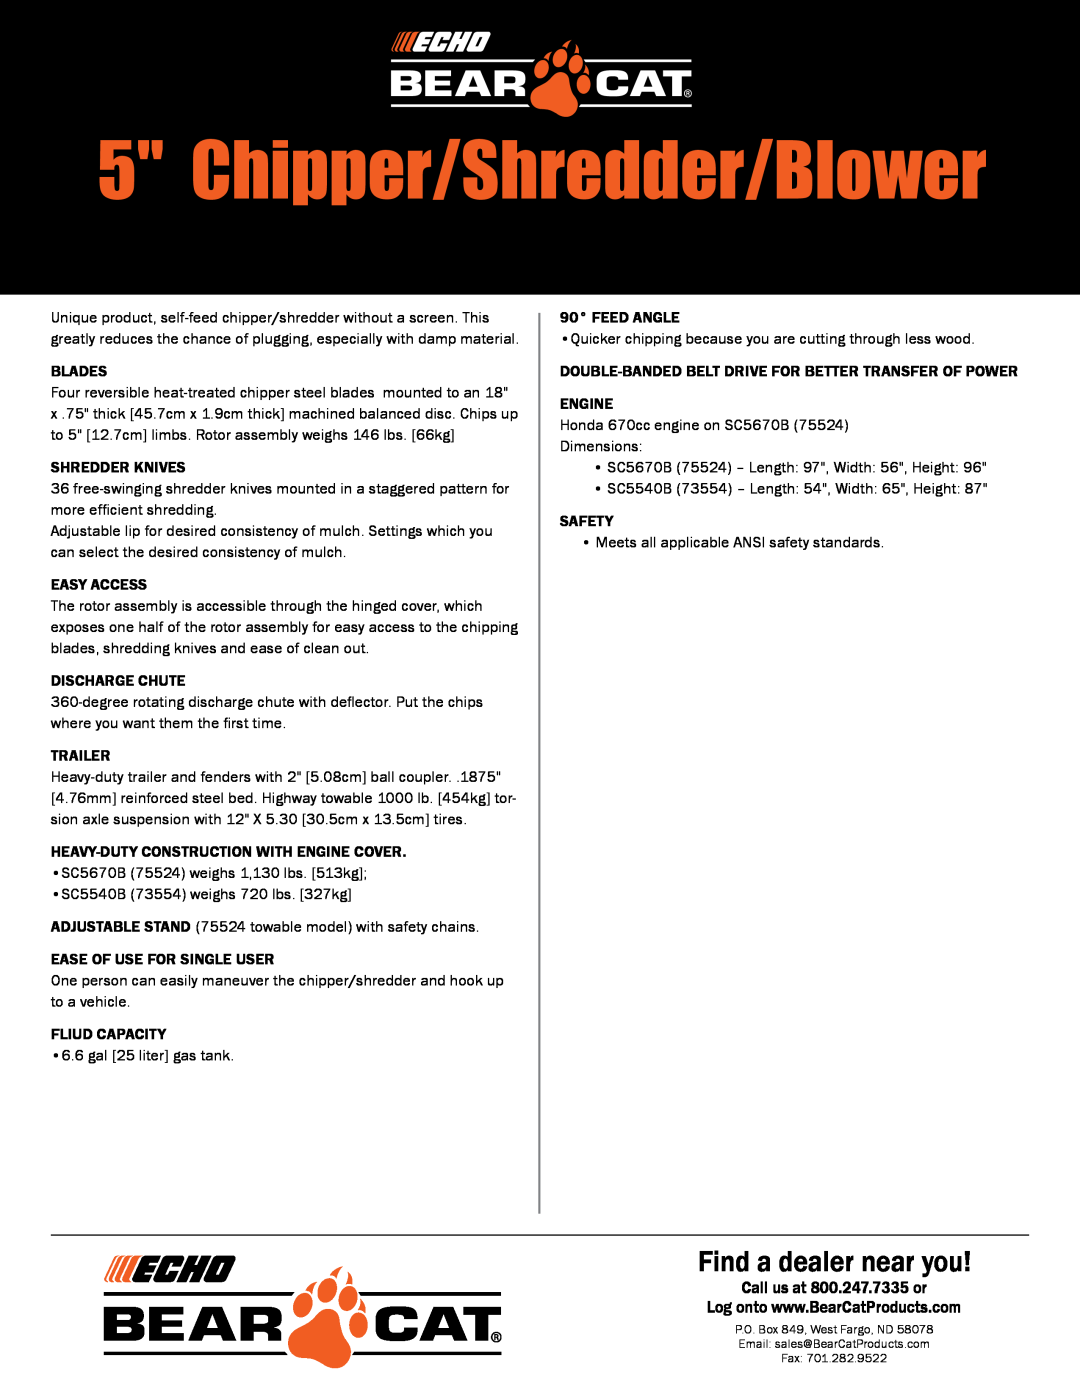 Echo Bear Cat SC5670B (75524) manual Chipper/Shredder/Blower, Find a dealer near you, Call us at 800.247.7335 or, Blades 